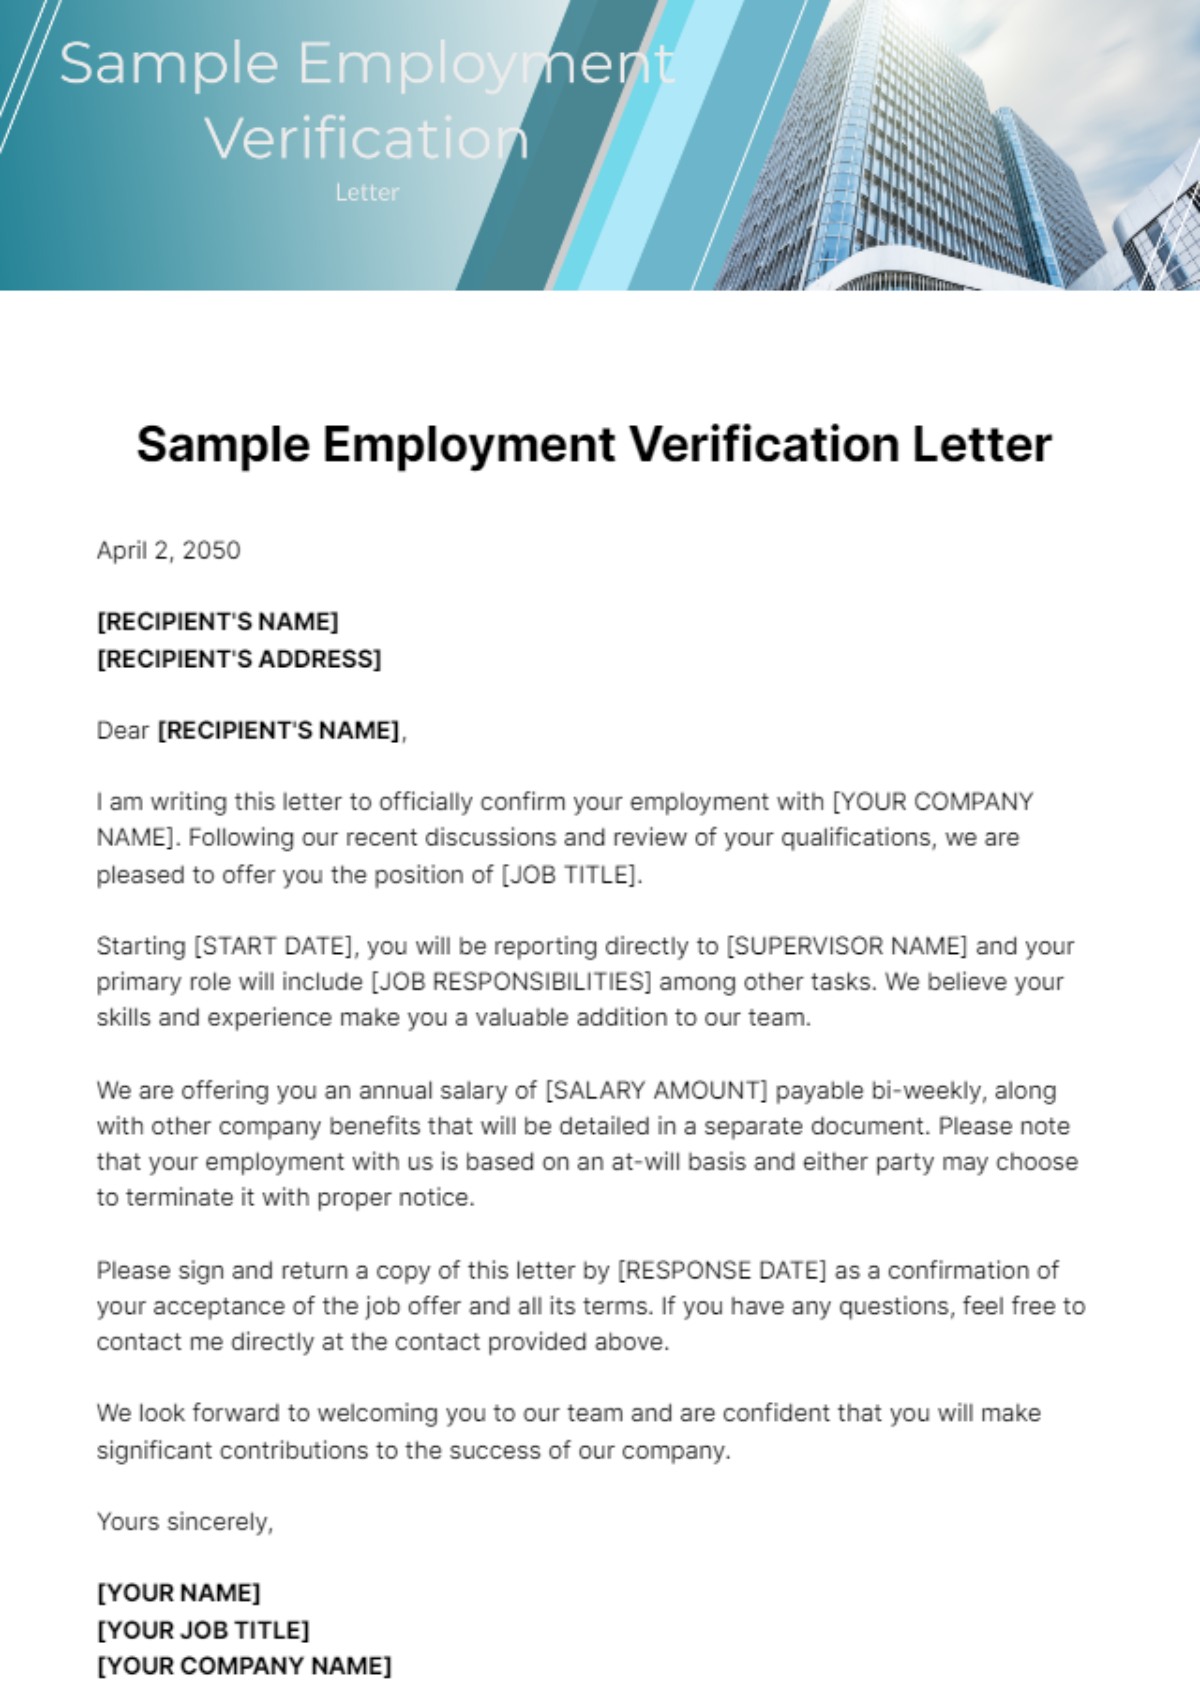 Sample Employment Verification Letter Template